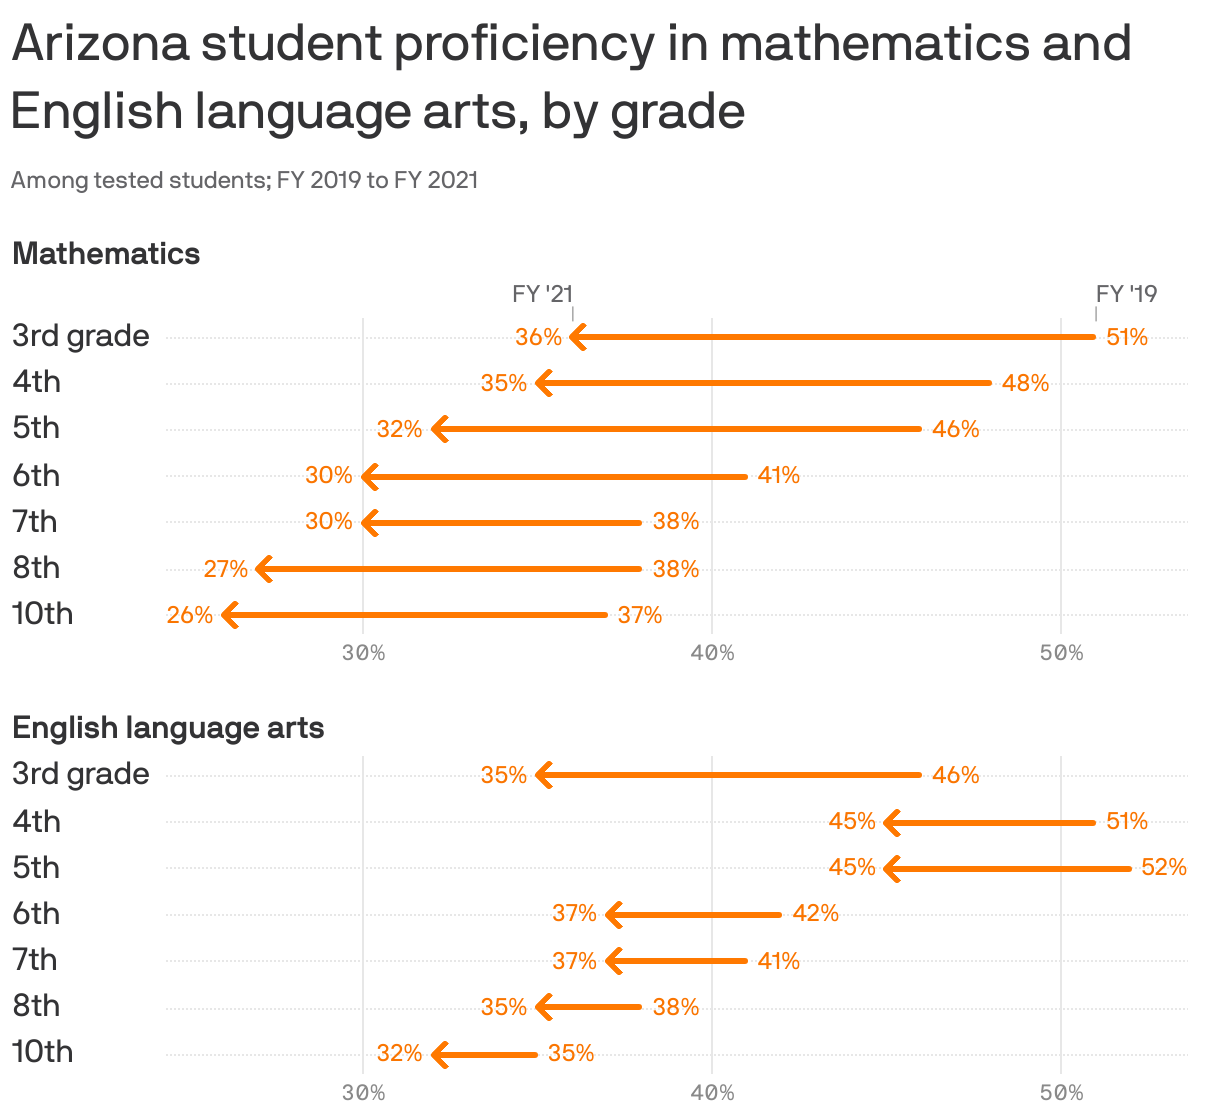 Arizona student proficiency in mathematics and English language arts, by grade